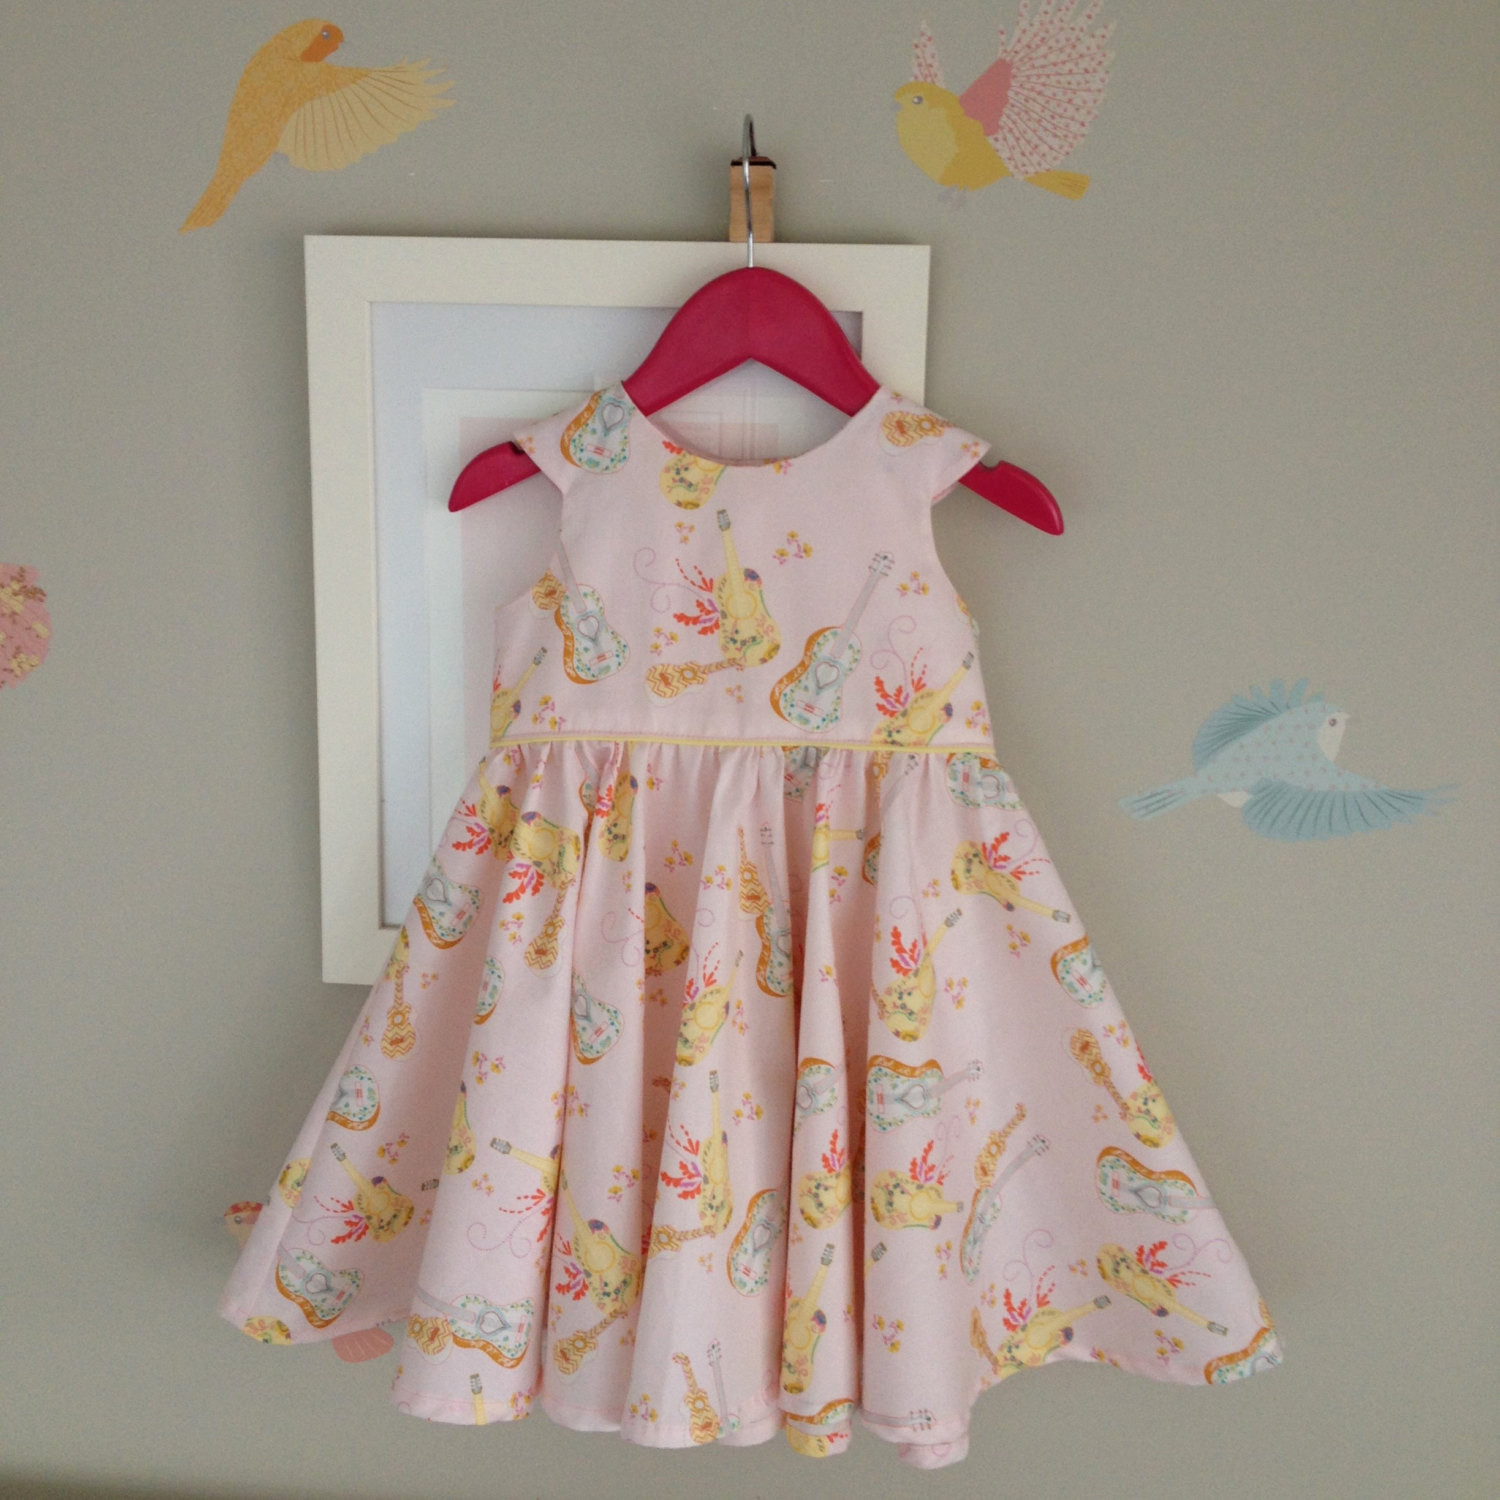 Tea Party Dresses For Kids
 SALE Toddler Girls Dress Size 2 Tea Party Dress kids